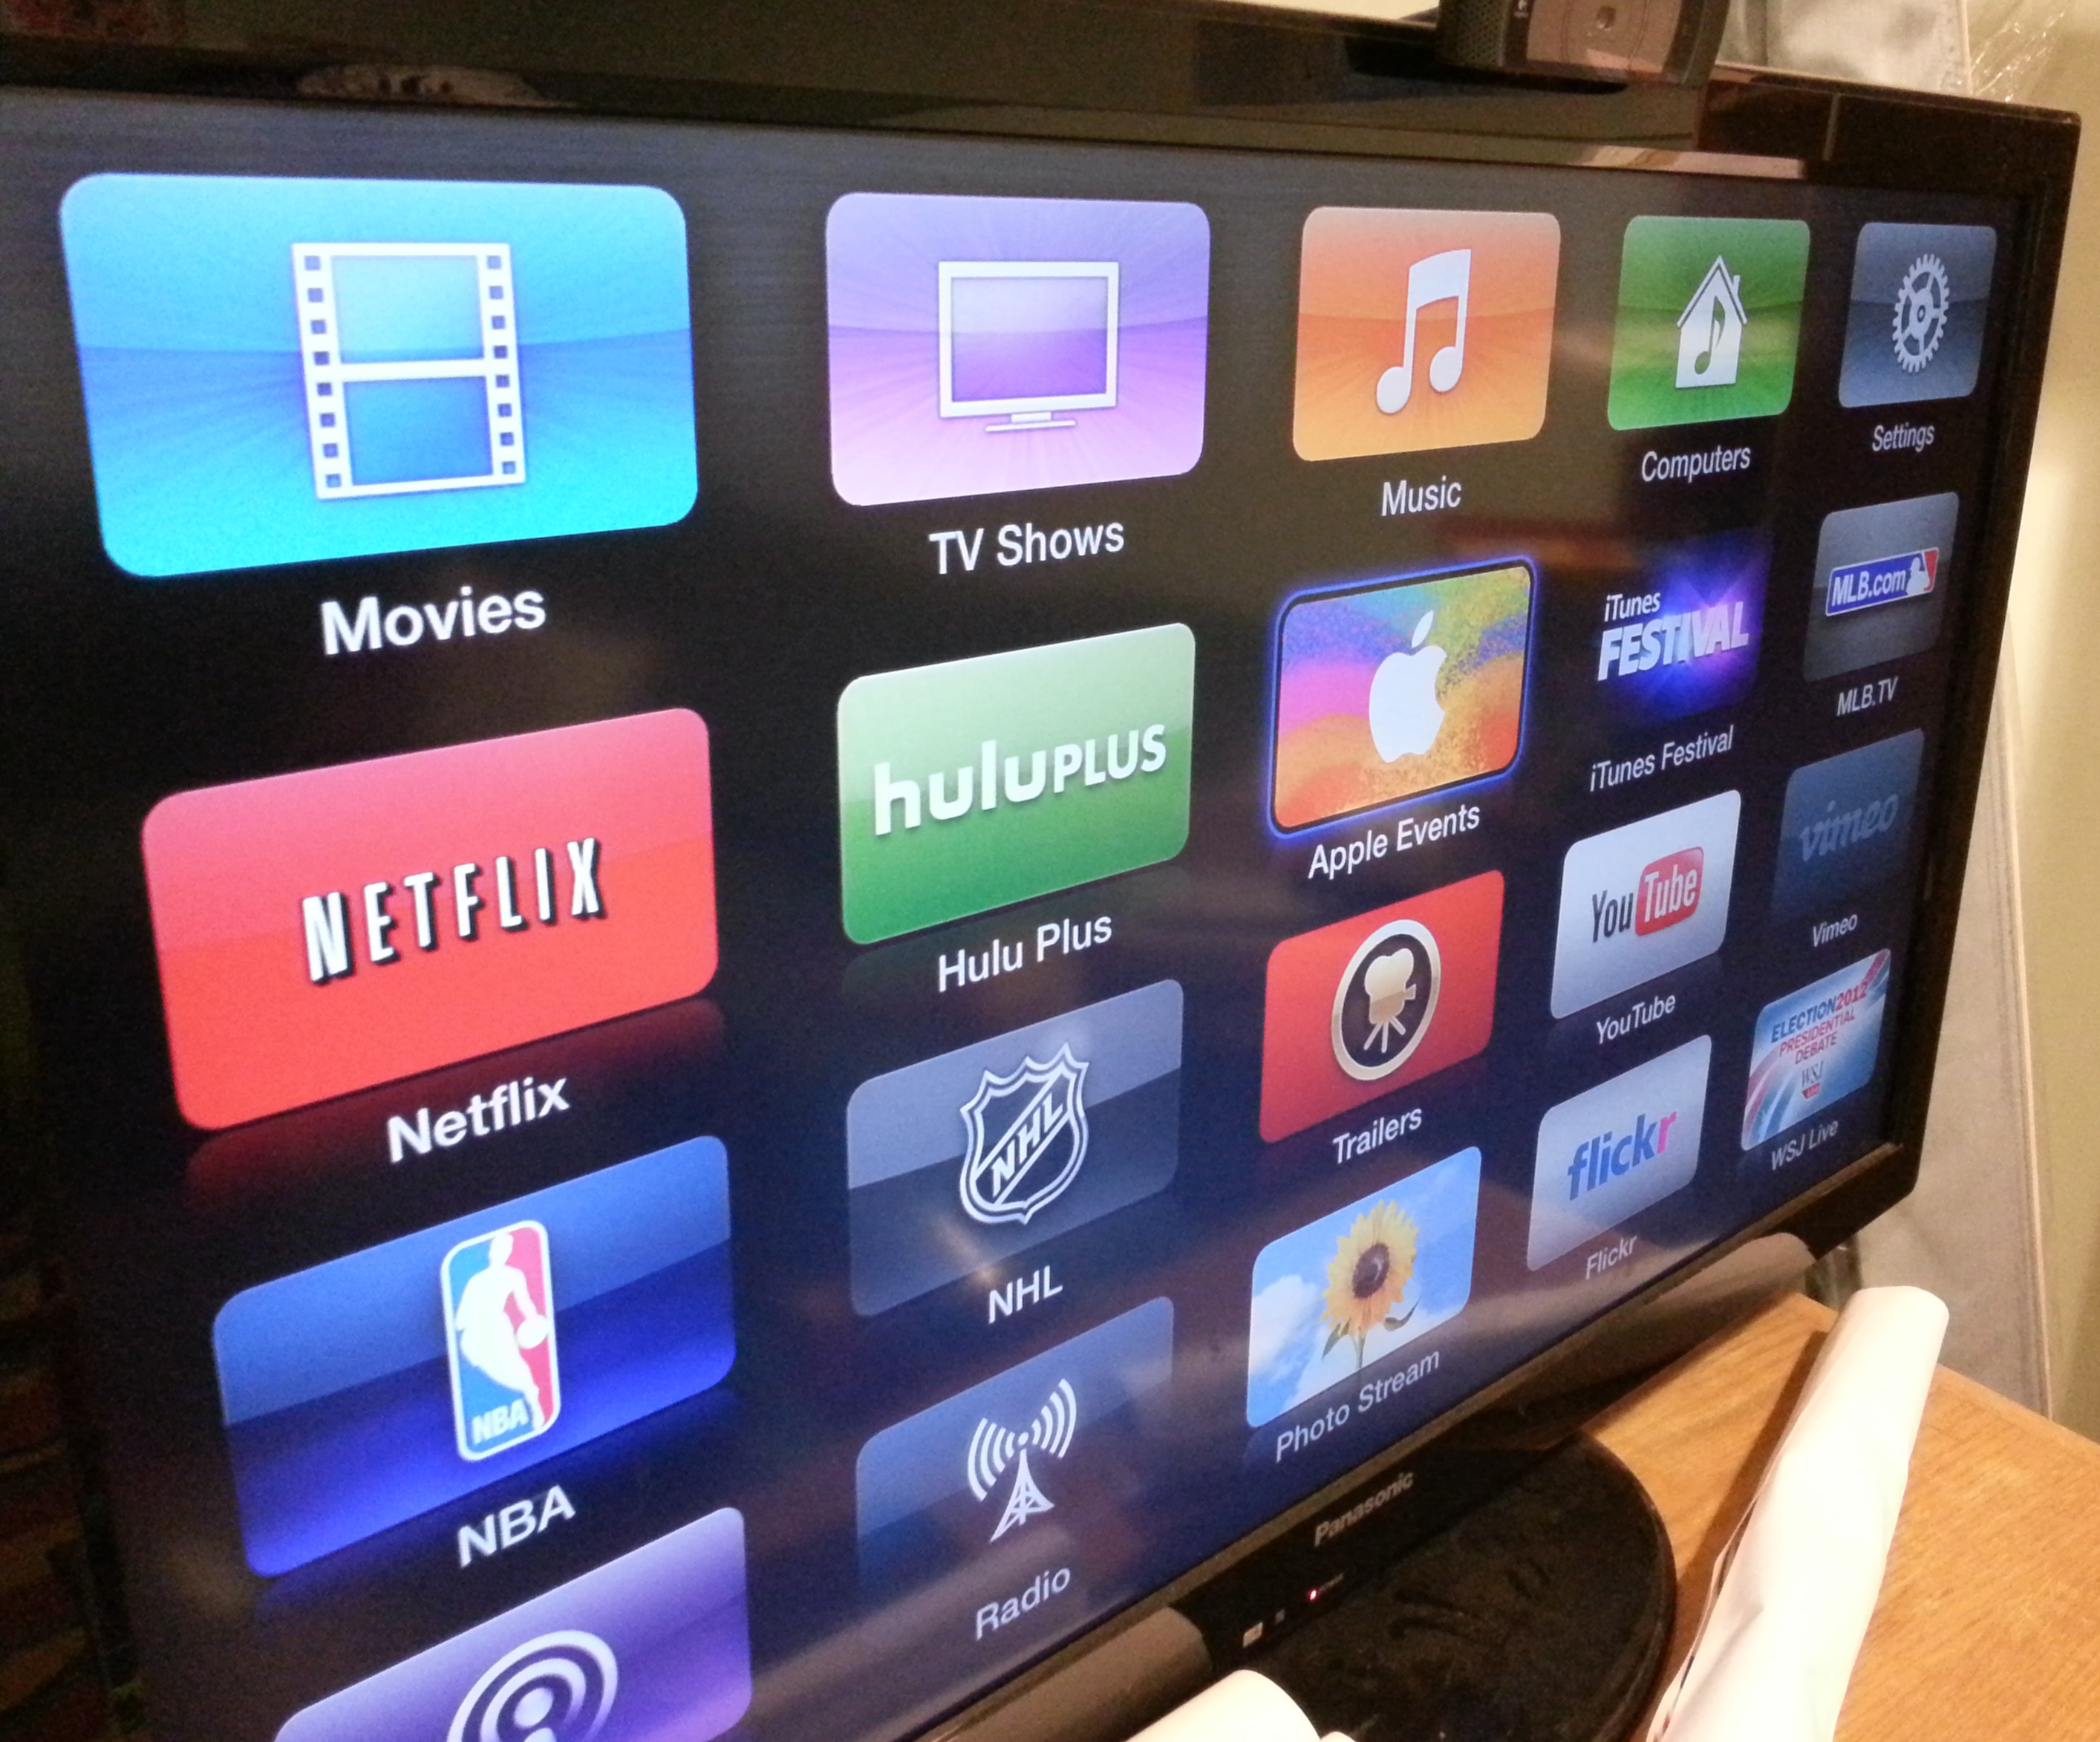 Apple live streaming todays iPad mini event on the Apple TV